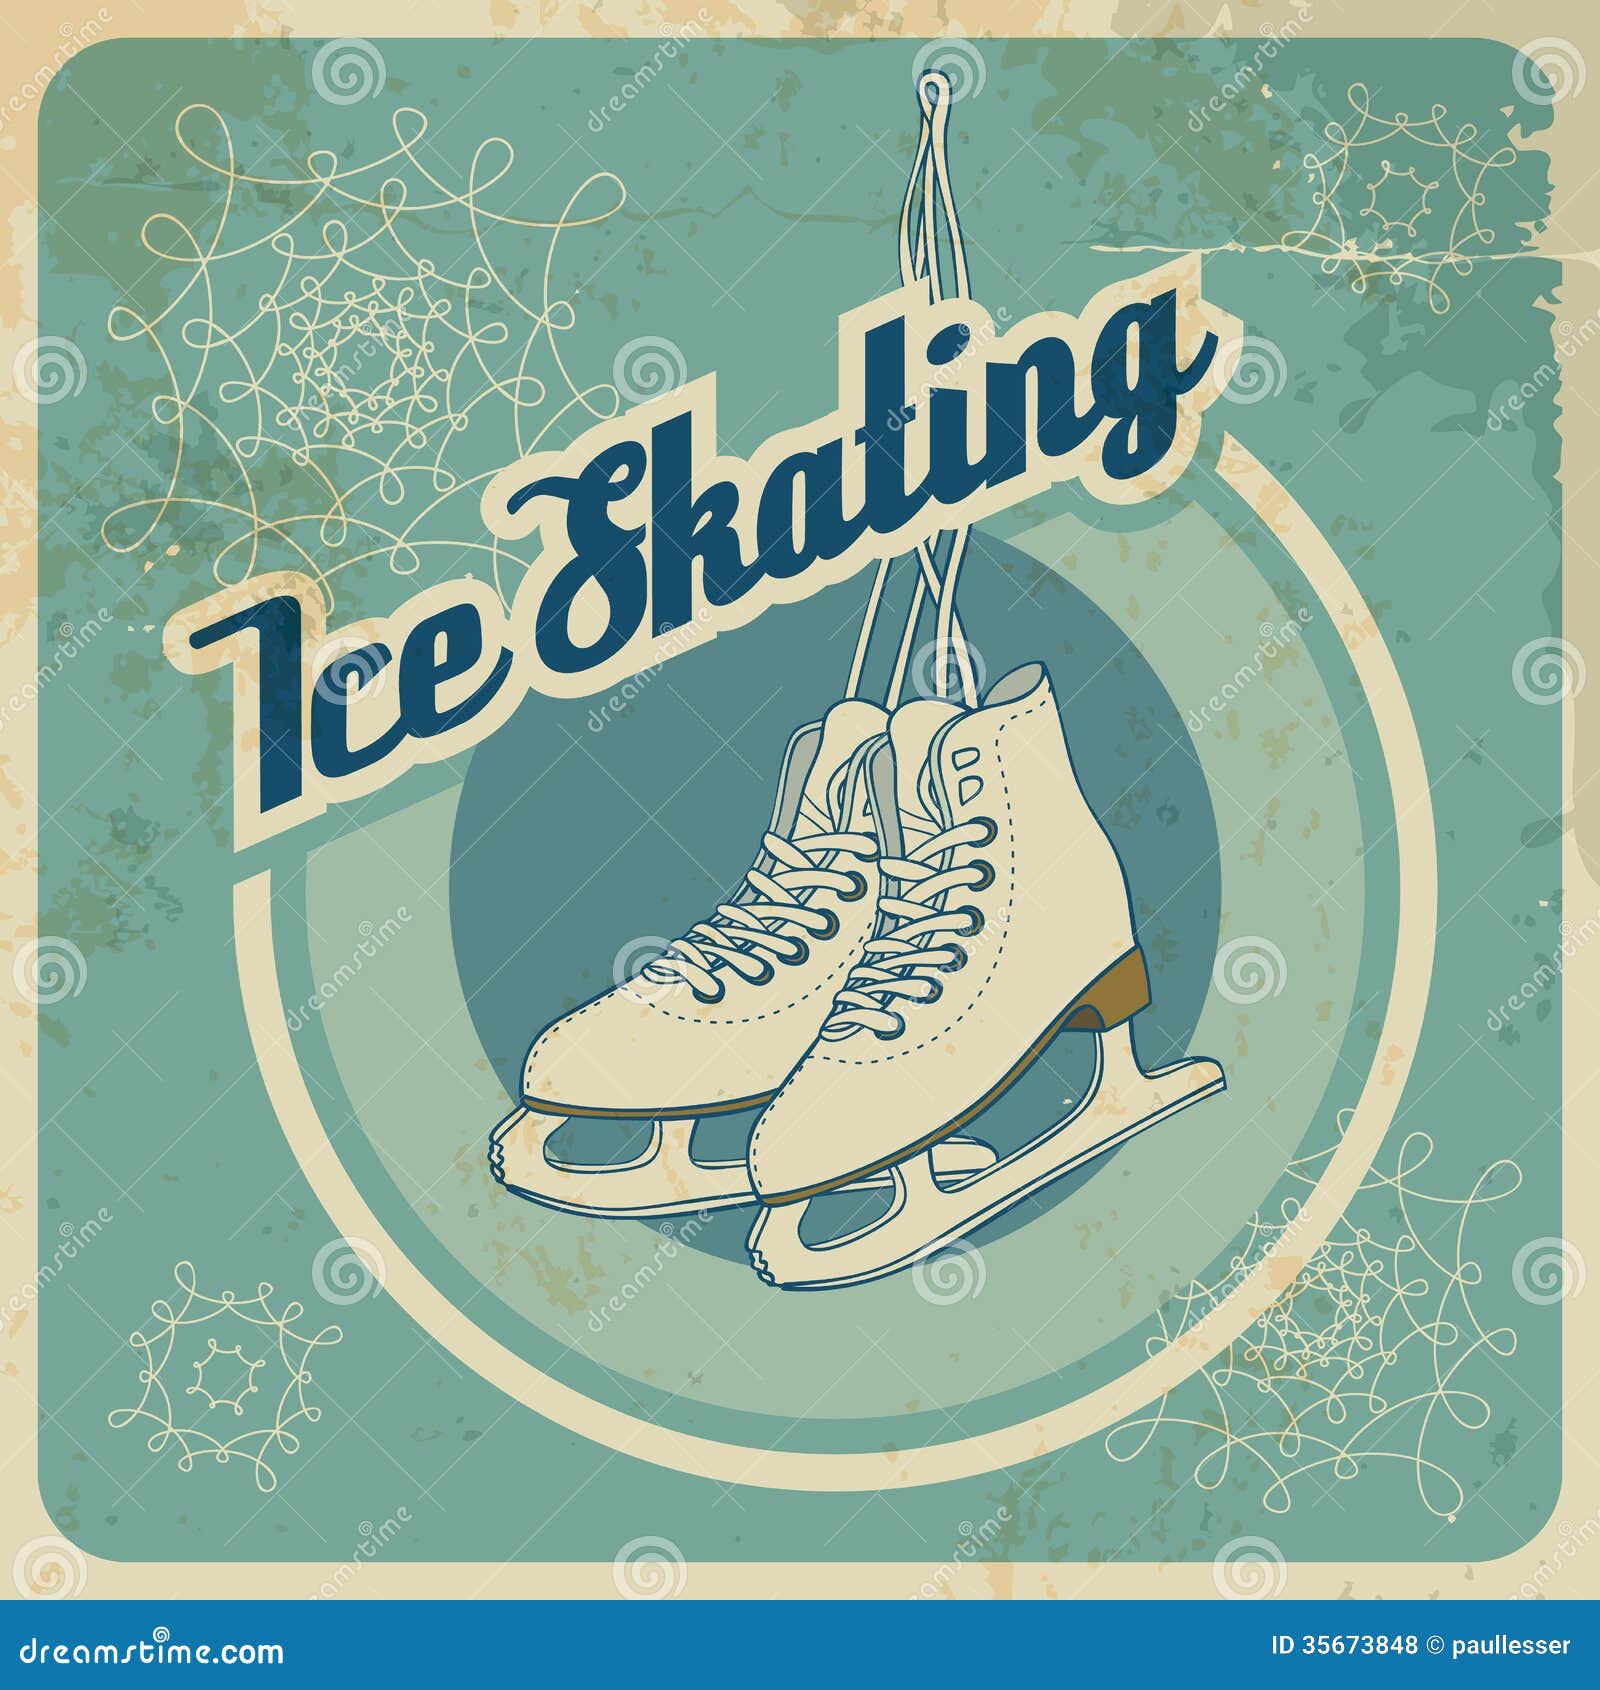 ice skating retro card